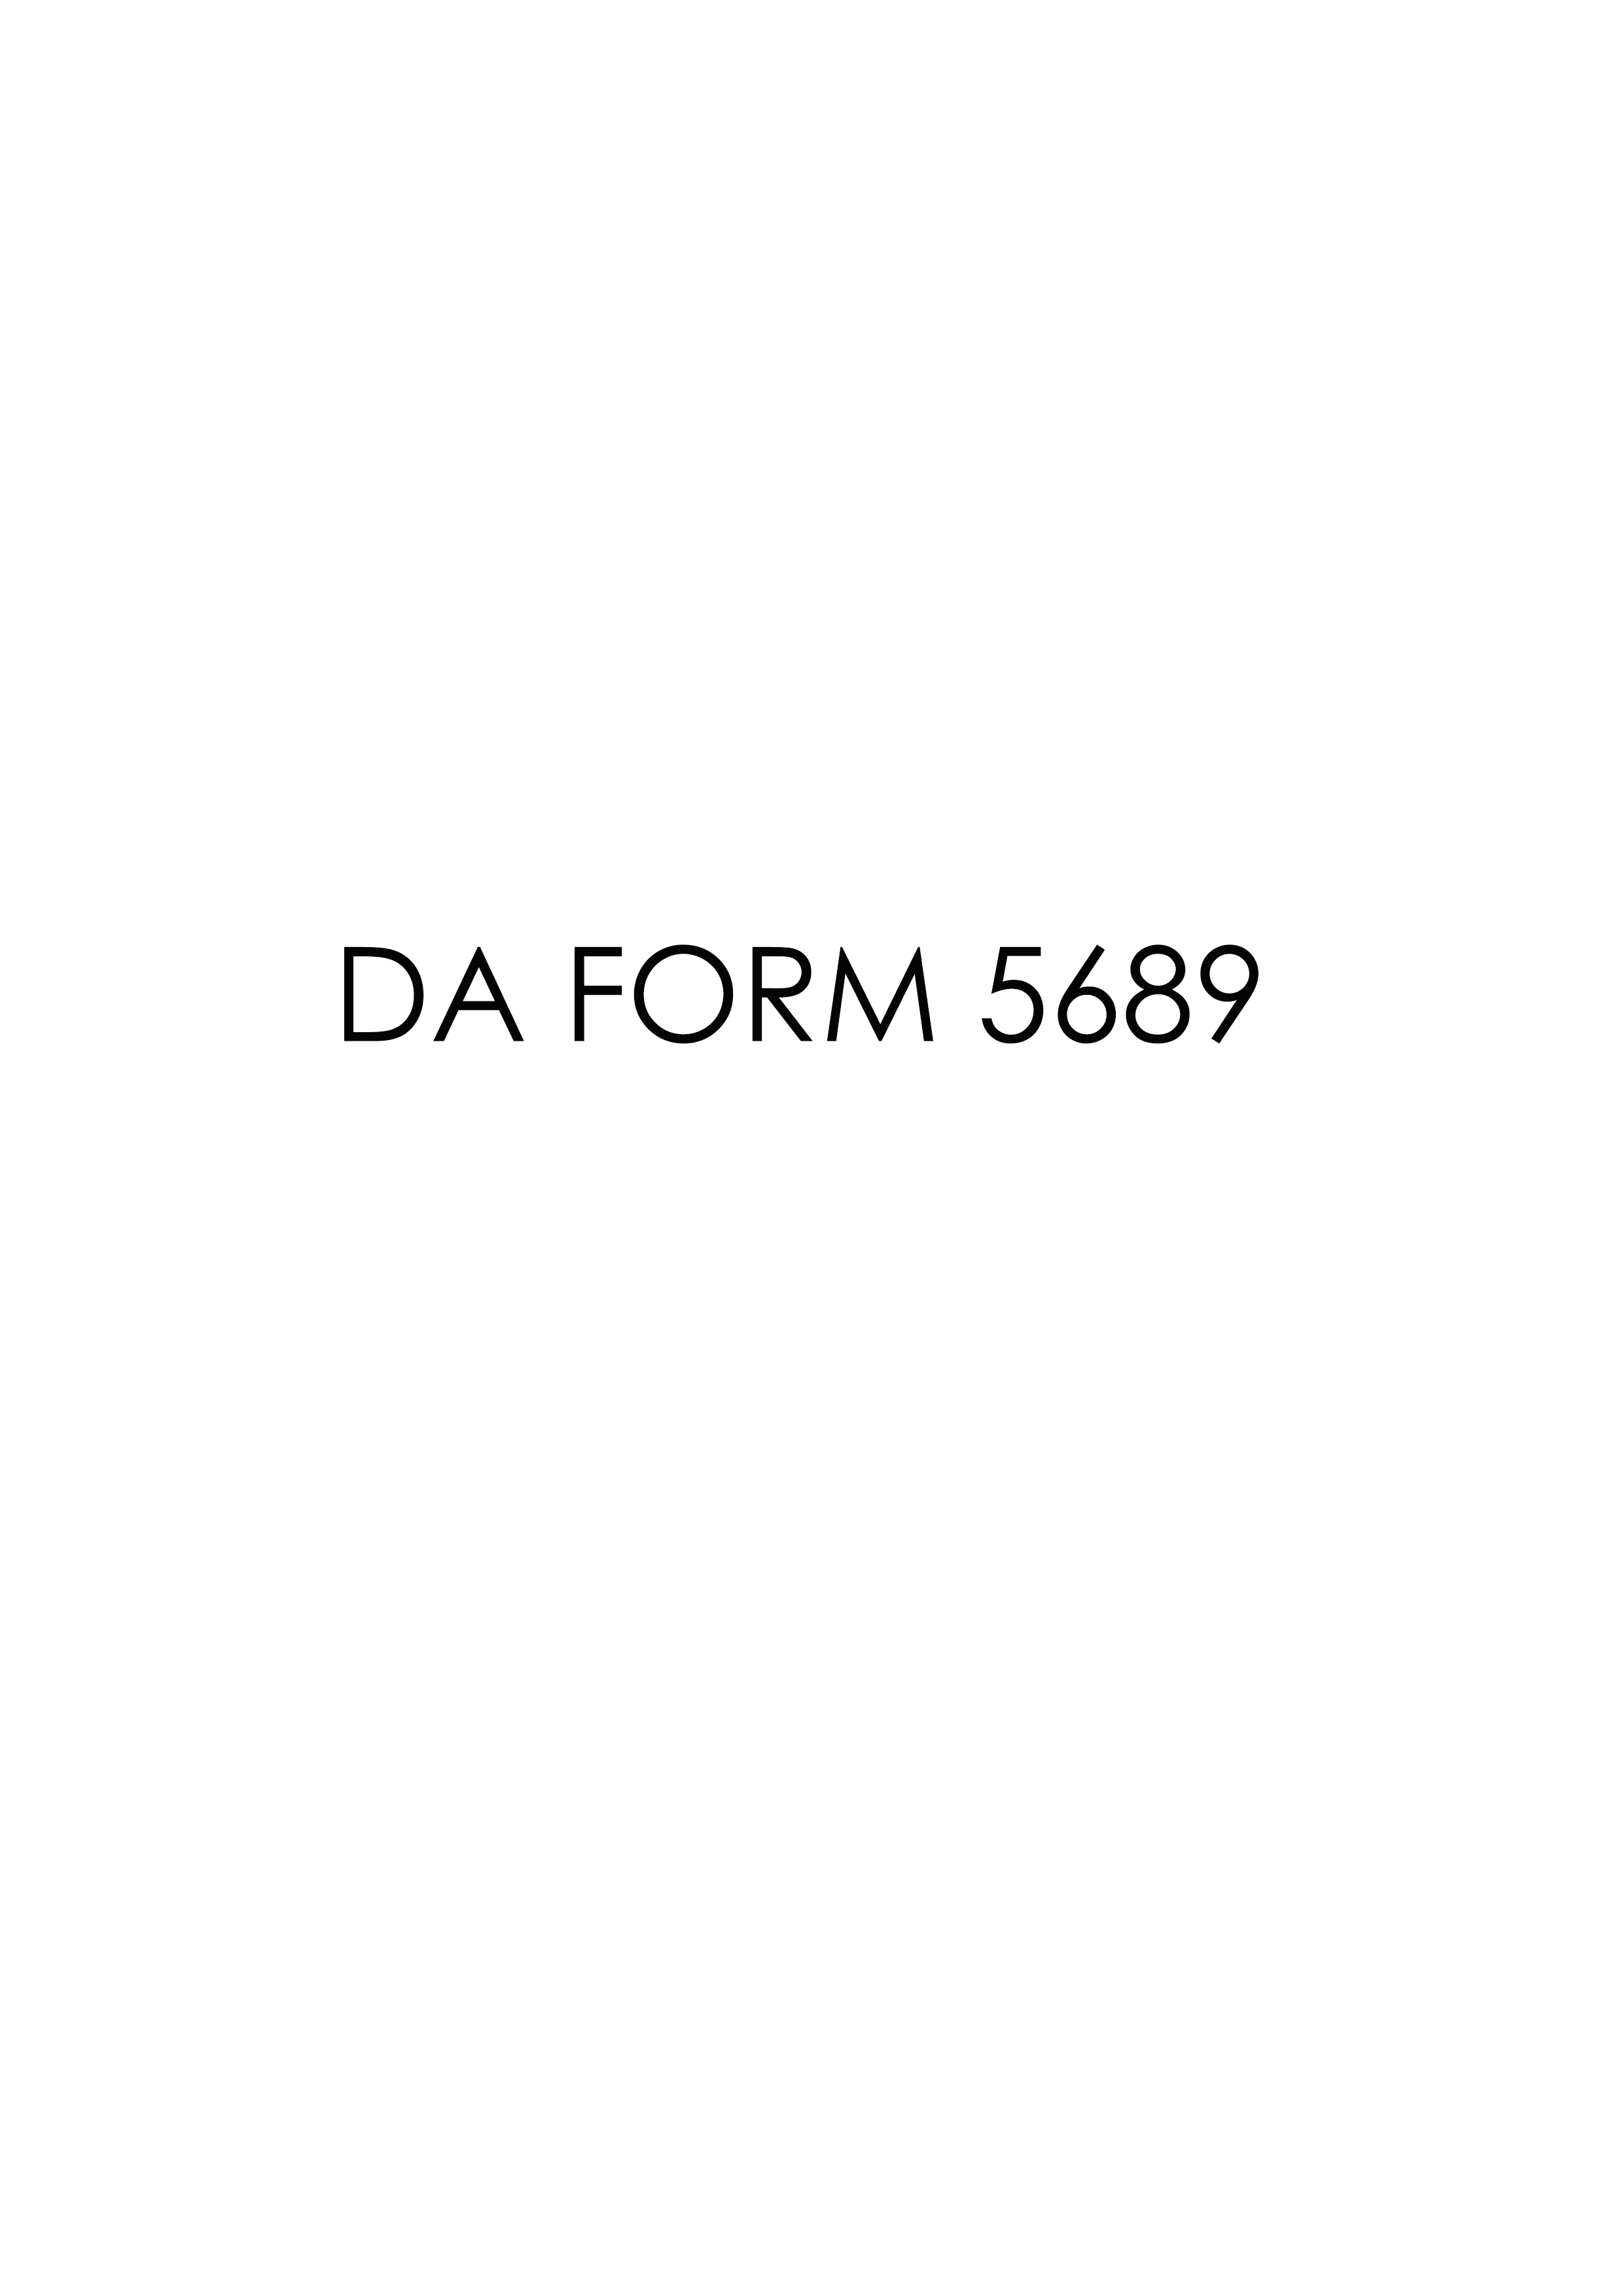 da Form 5689 fillable